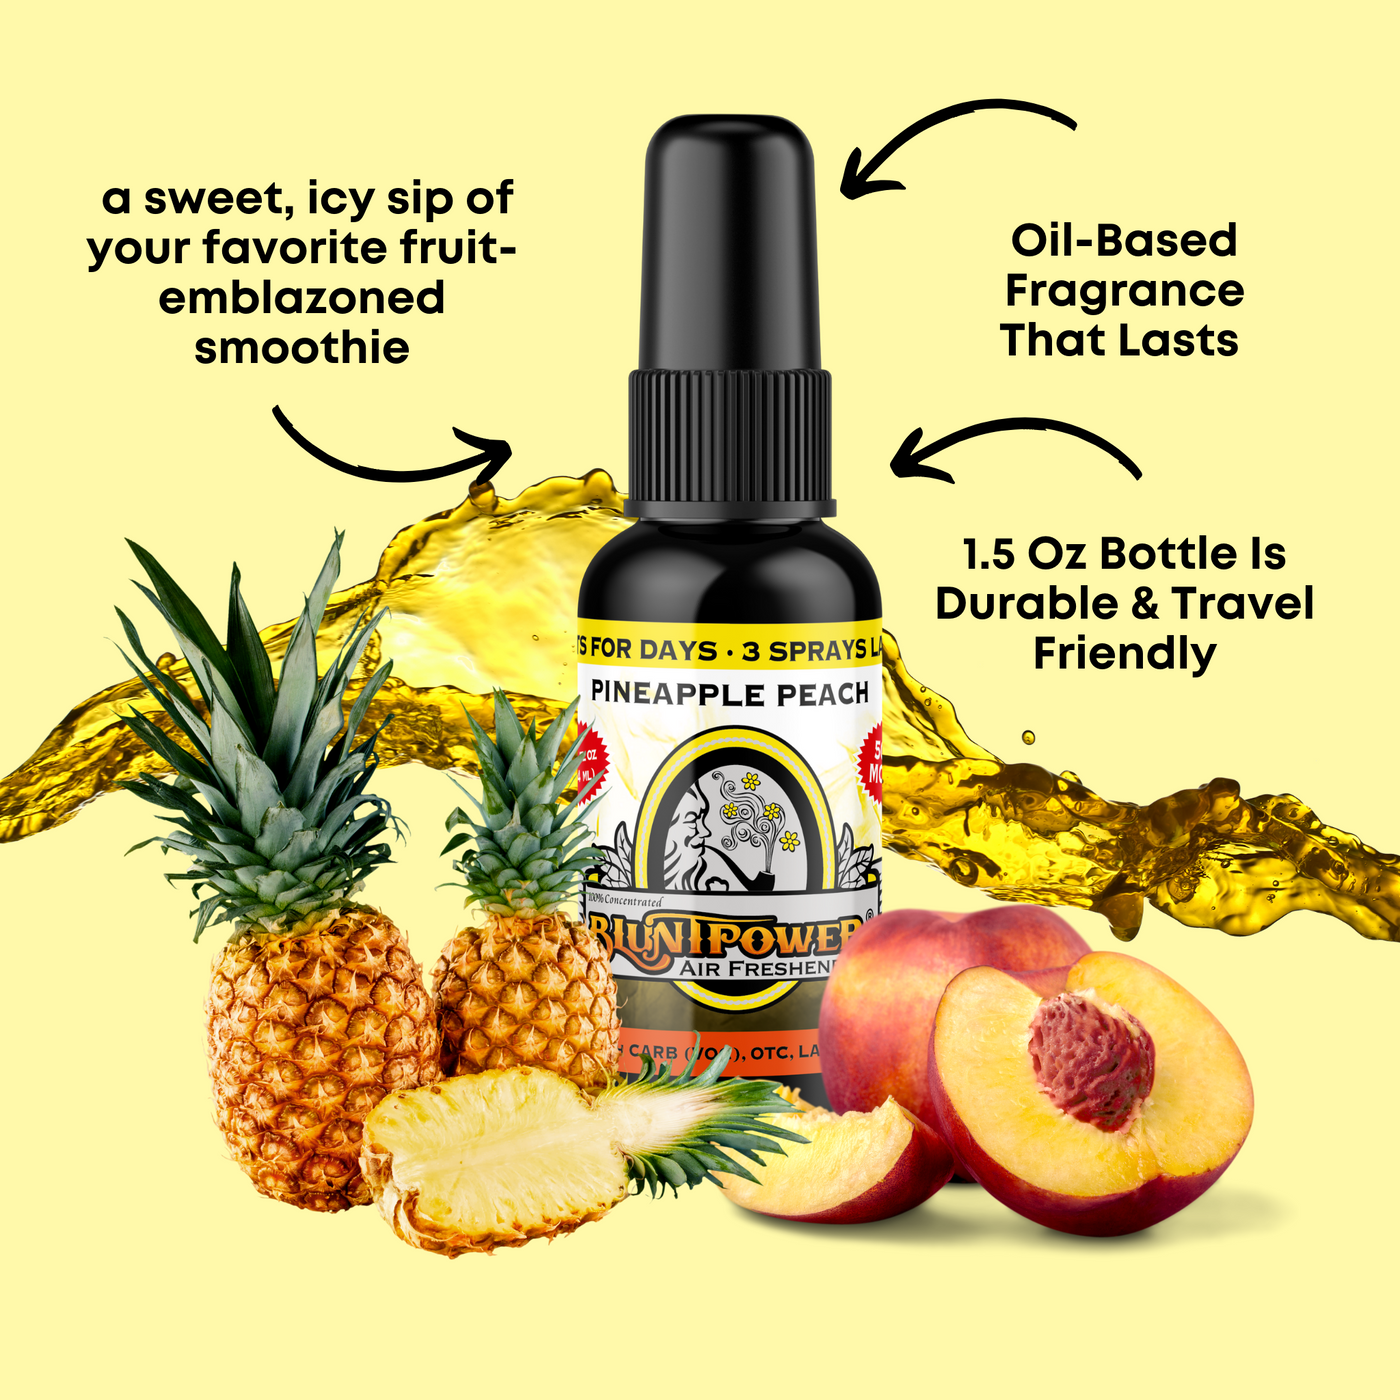 Pineapple Peach Air Freshener Spray